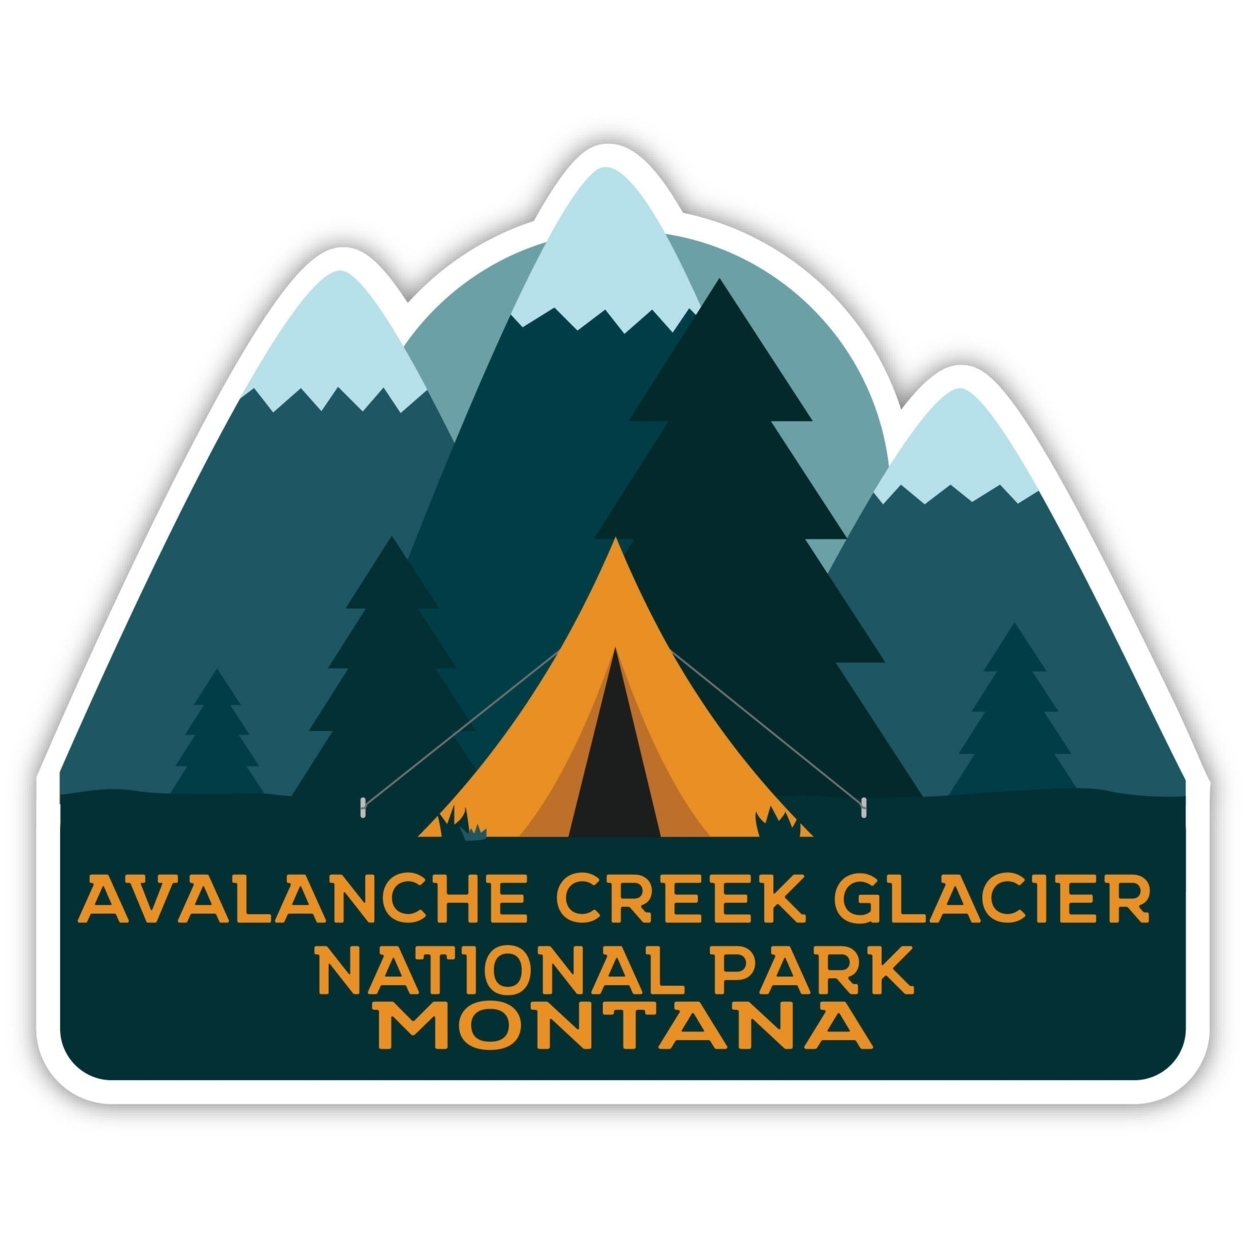 Avalanche Creek Glacier National Park Montana Souvenir Decorative Stickers (Choose Theme And Size) - 4-Pack, 10-Inch, Tent